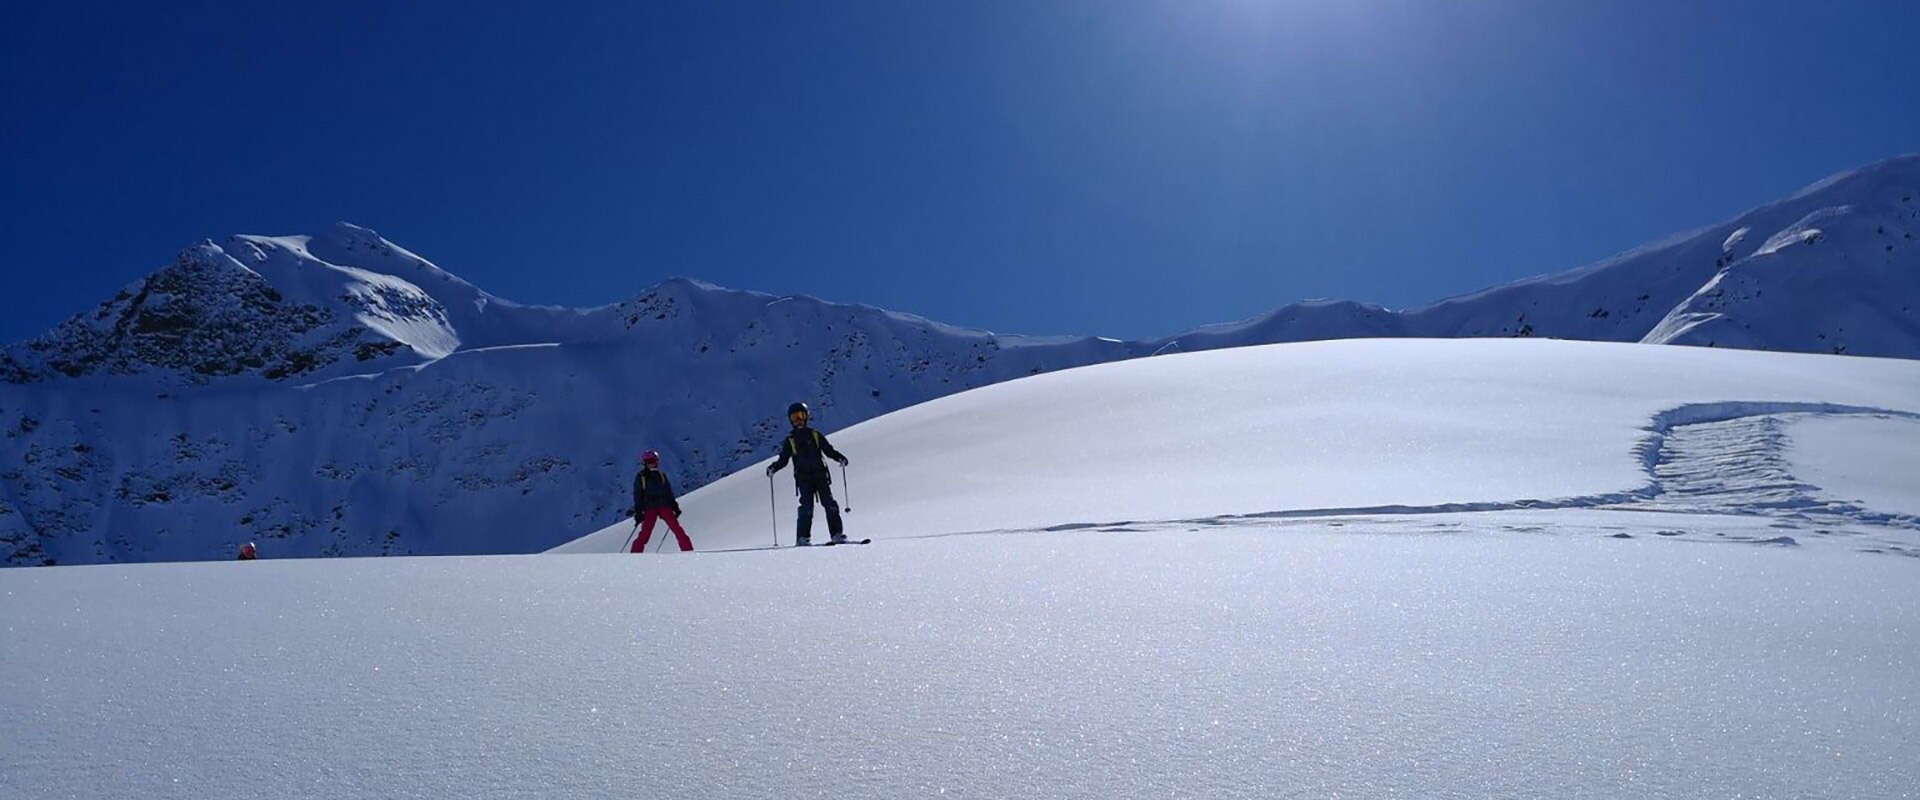 Private lessons with the Pettneu am Arlberg ski school